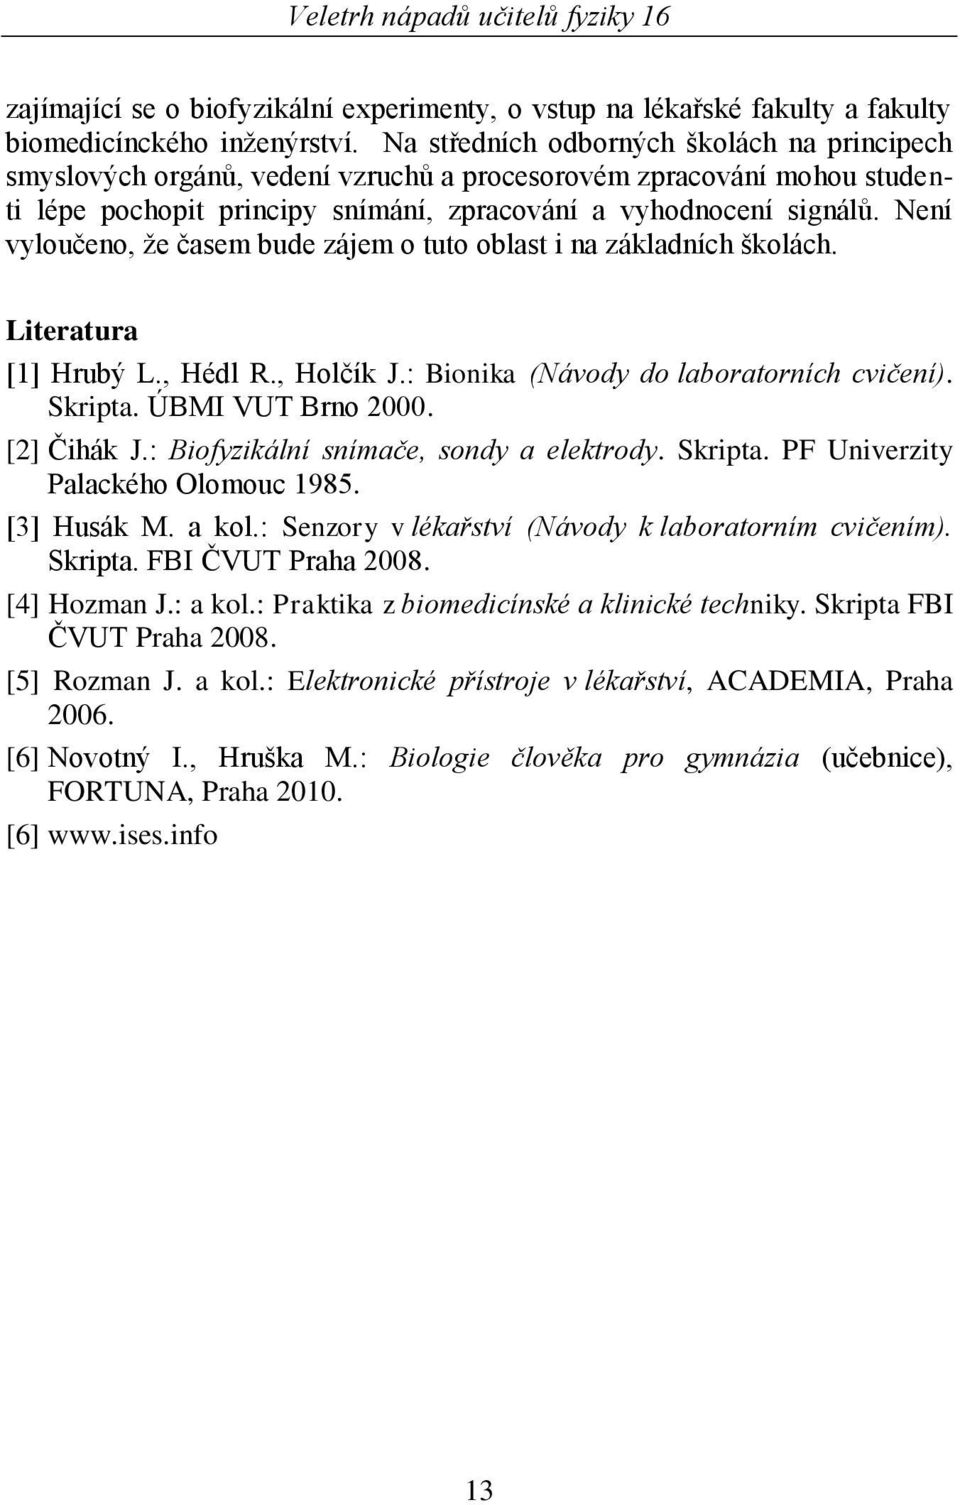 Není vyloučeno, ţe časem bude zájem o tuto oblast i na základních školách. Literatura [1] Hrubý L., Hédl R., Holčík J.: Bionika (Návody do laboratorních cvičení). Skripta. ÚBMI VUT Brno 2000.